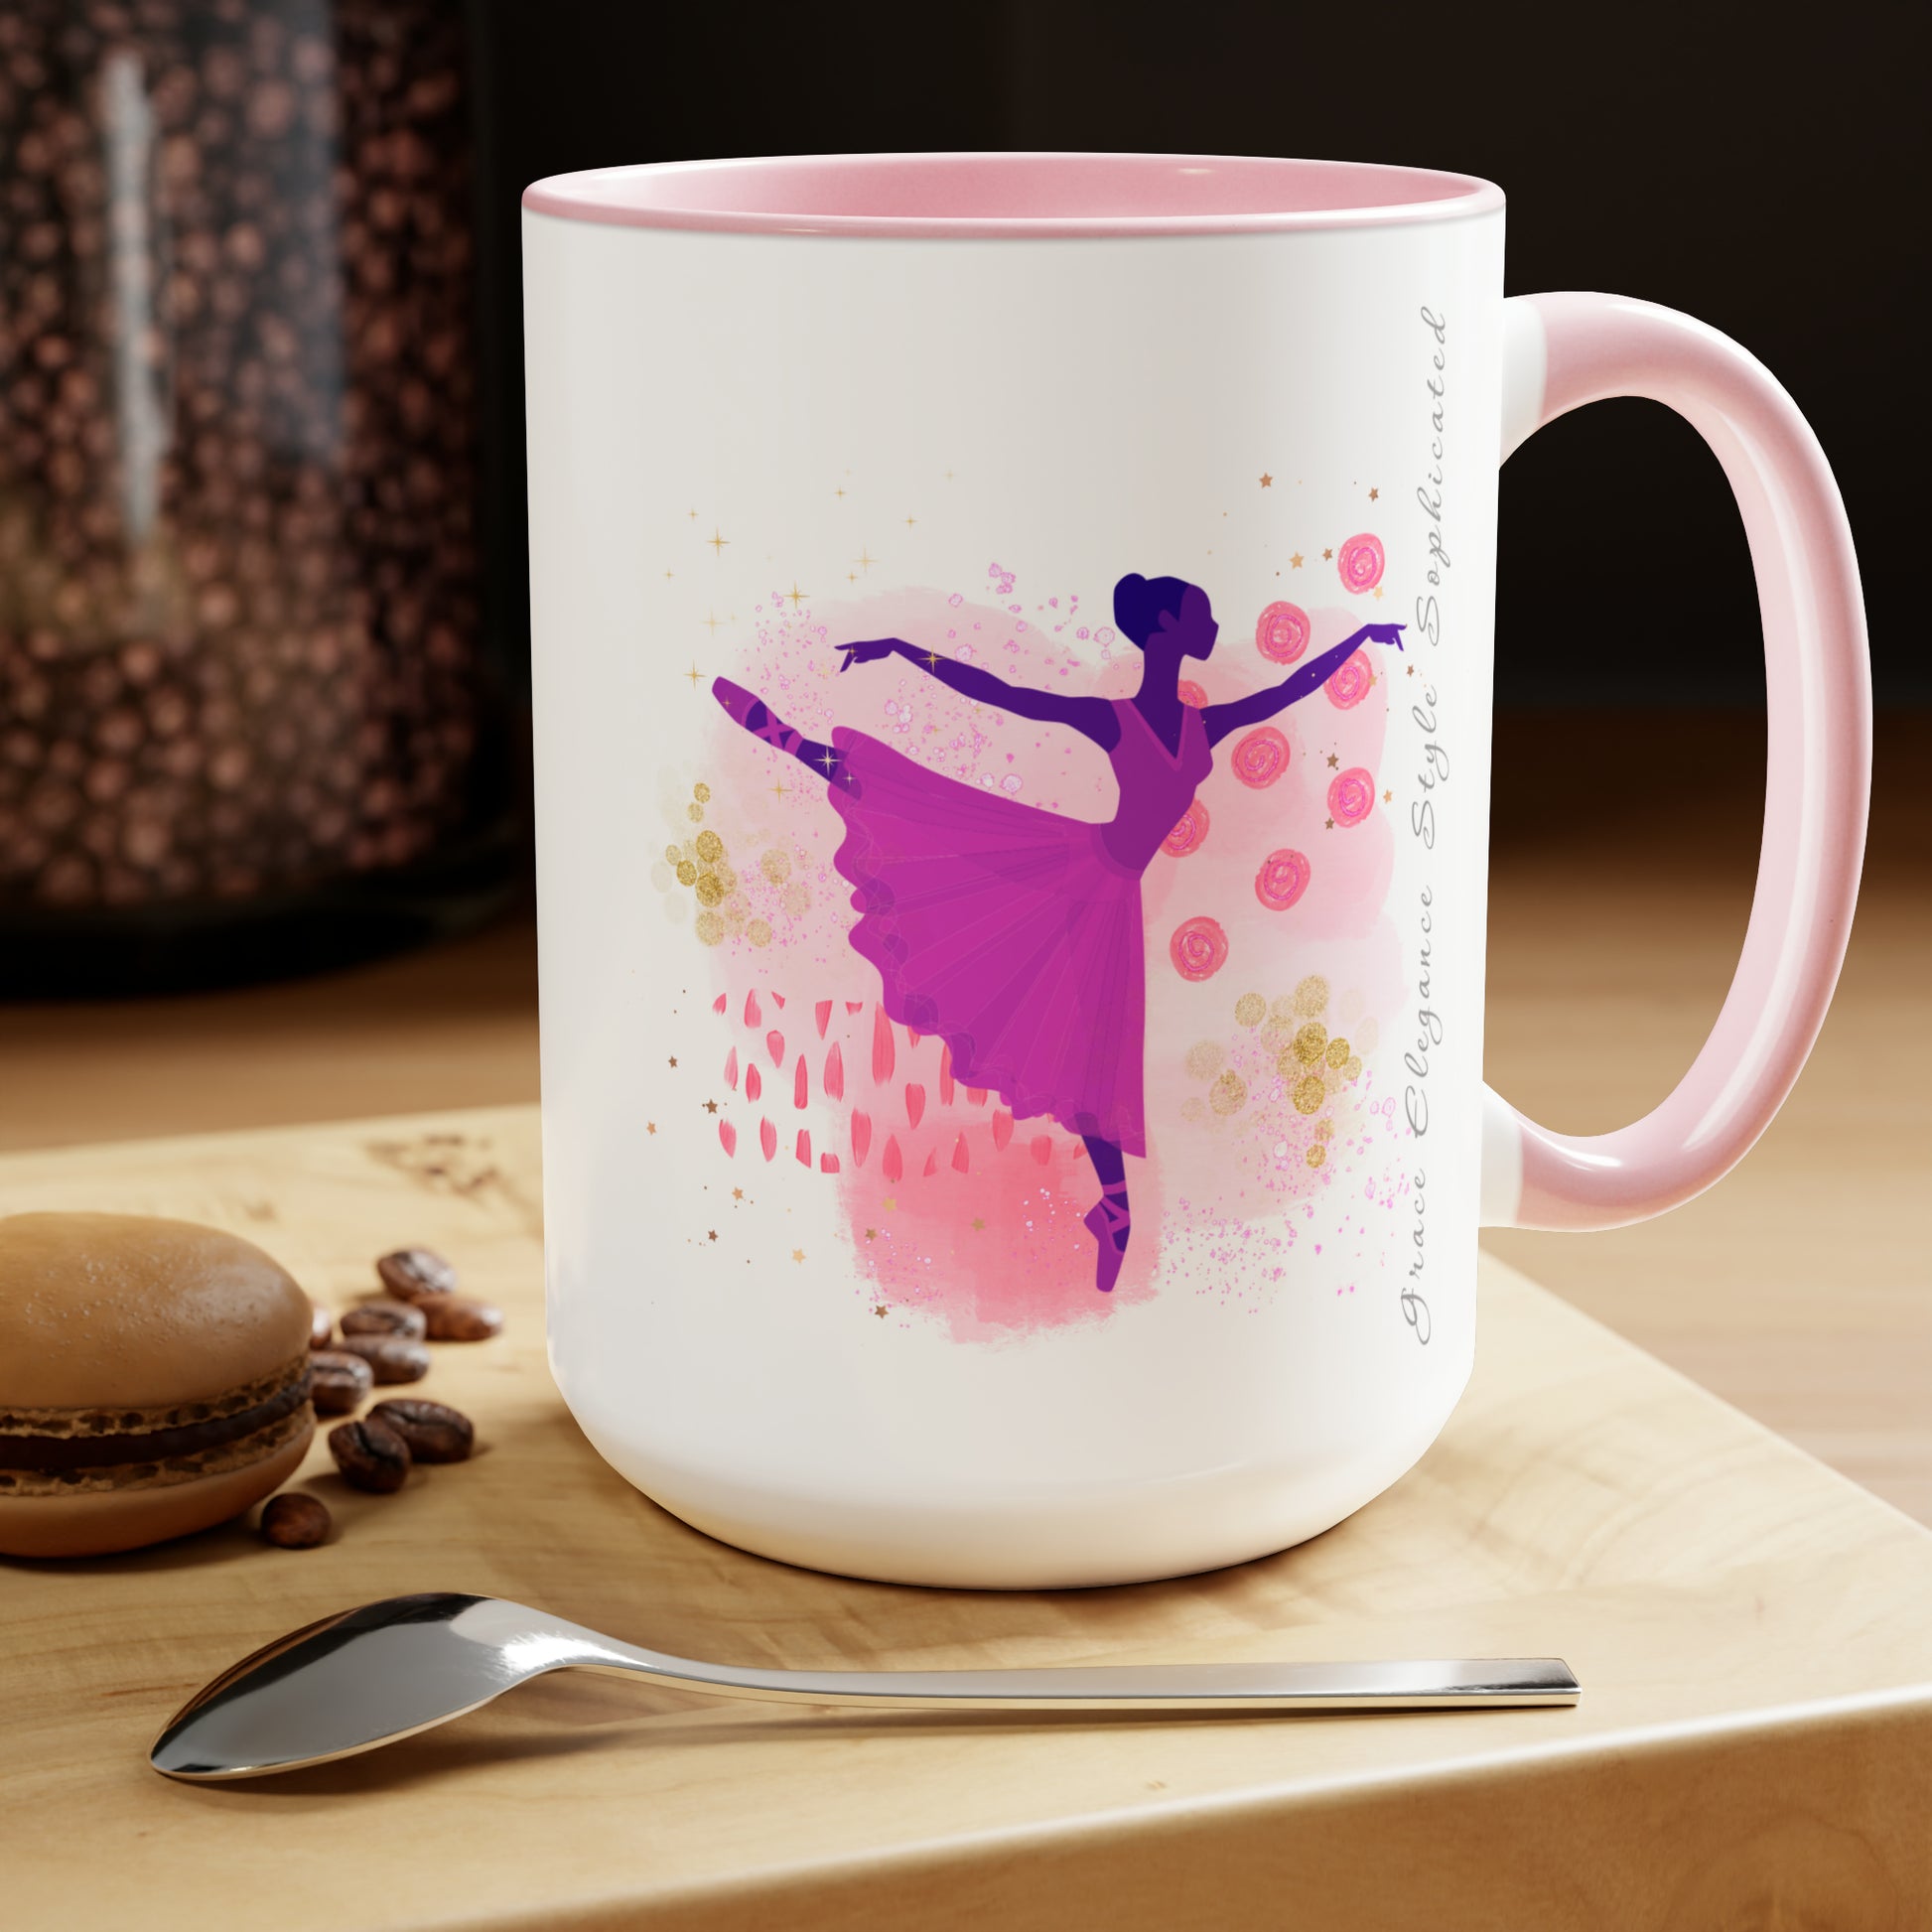 Two-Tone Coffee Mugs, 15oz - Sophisticated Ballerina - pink rim